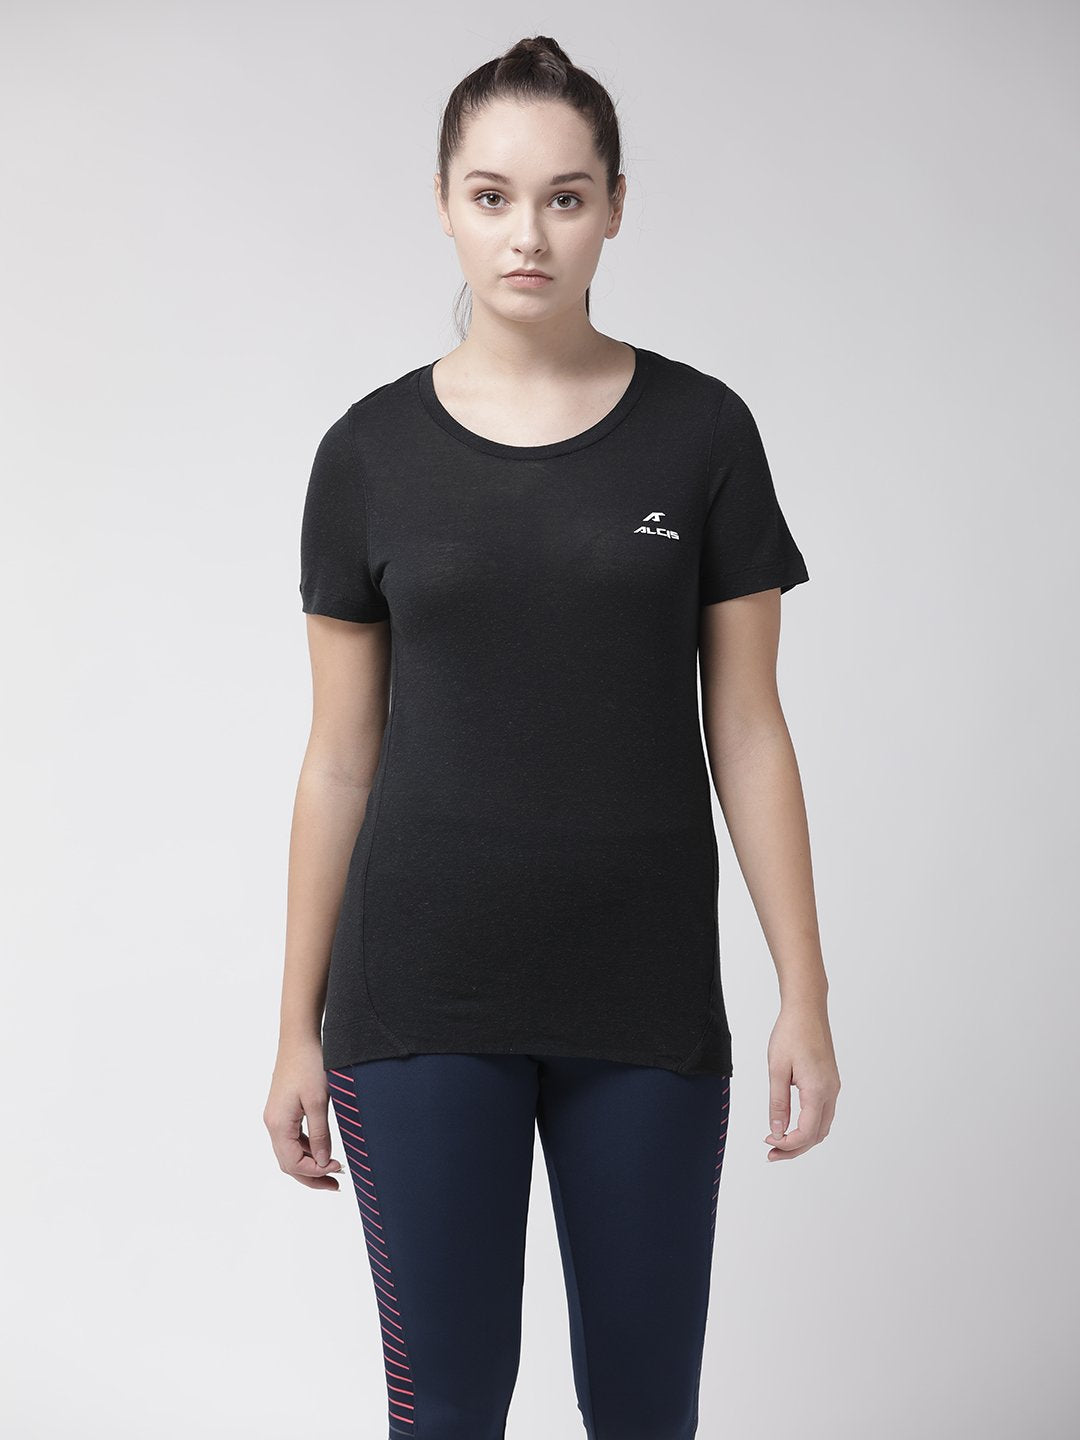 Alcis Women Black Solid Round Neck T-shirt